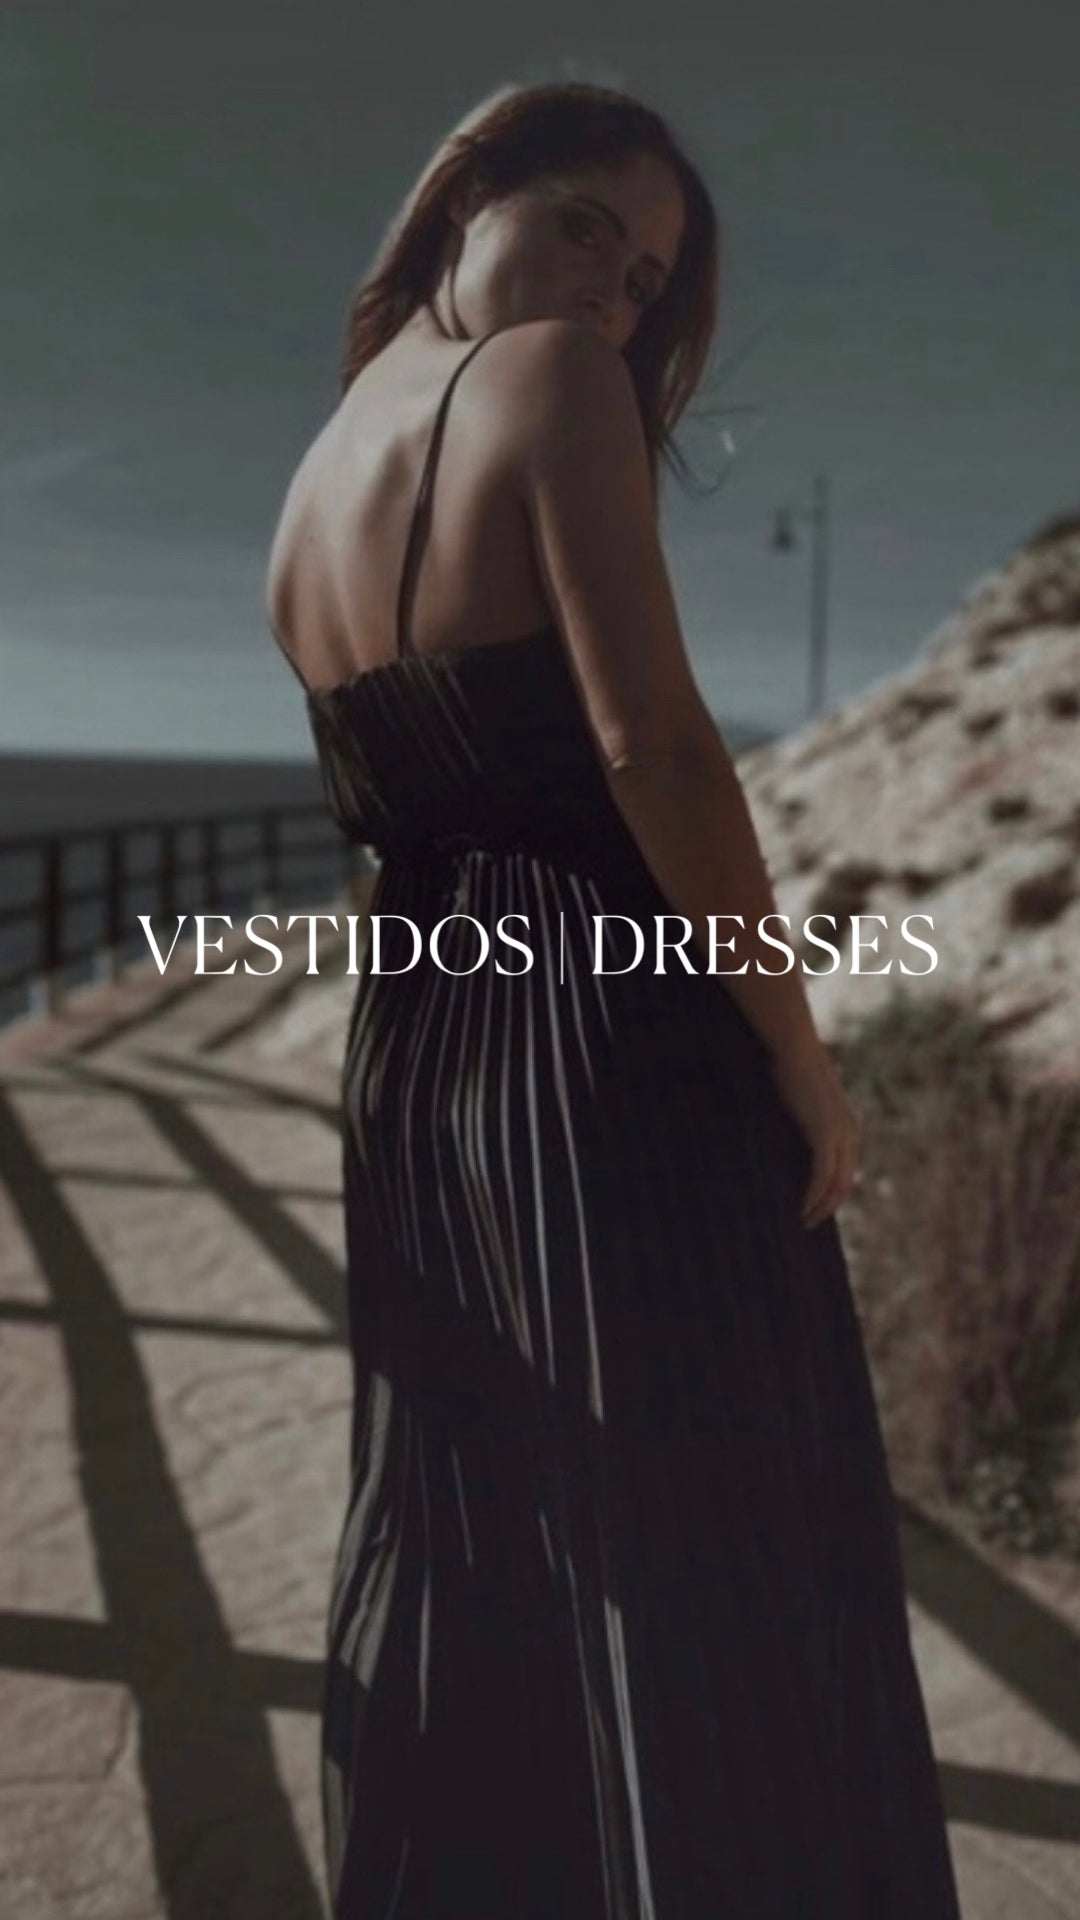 VESTIDOS | DRESSES